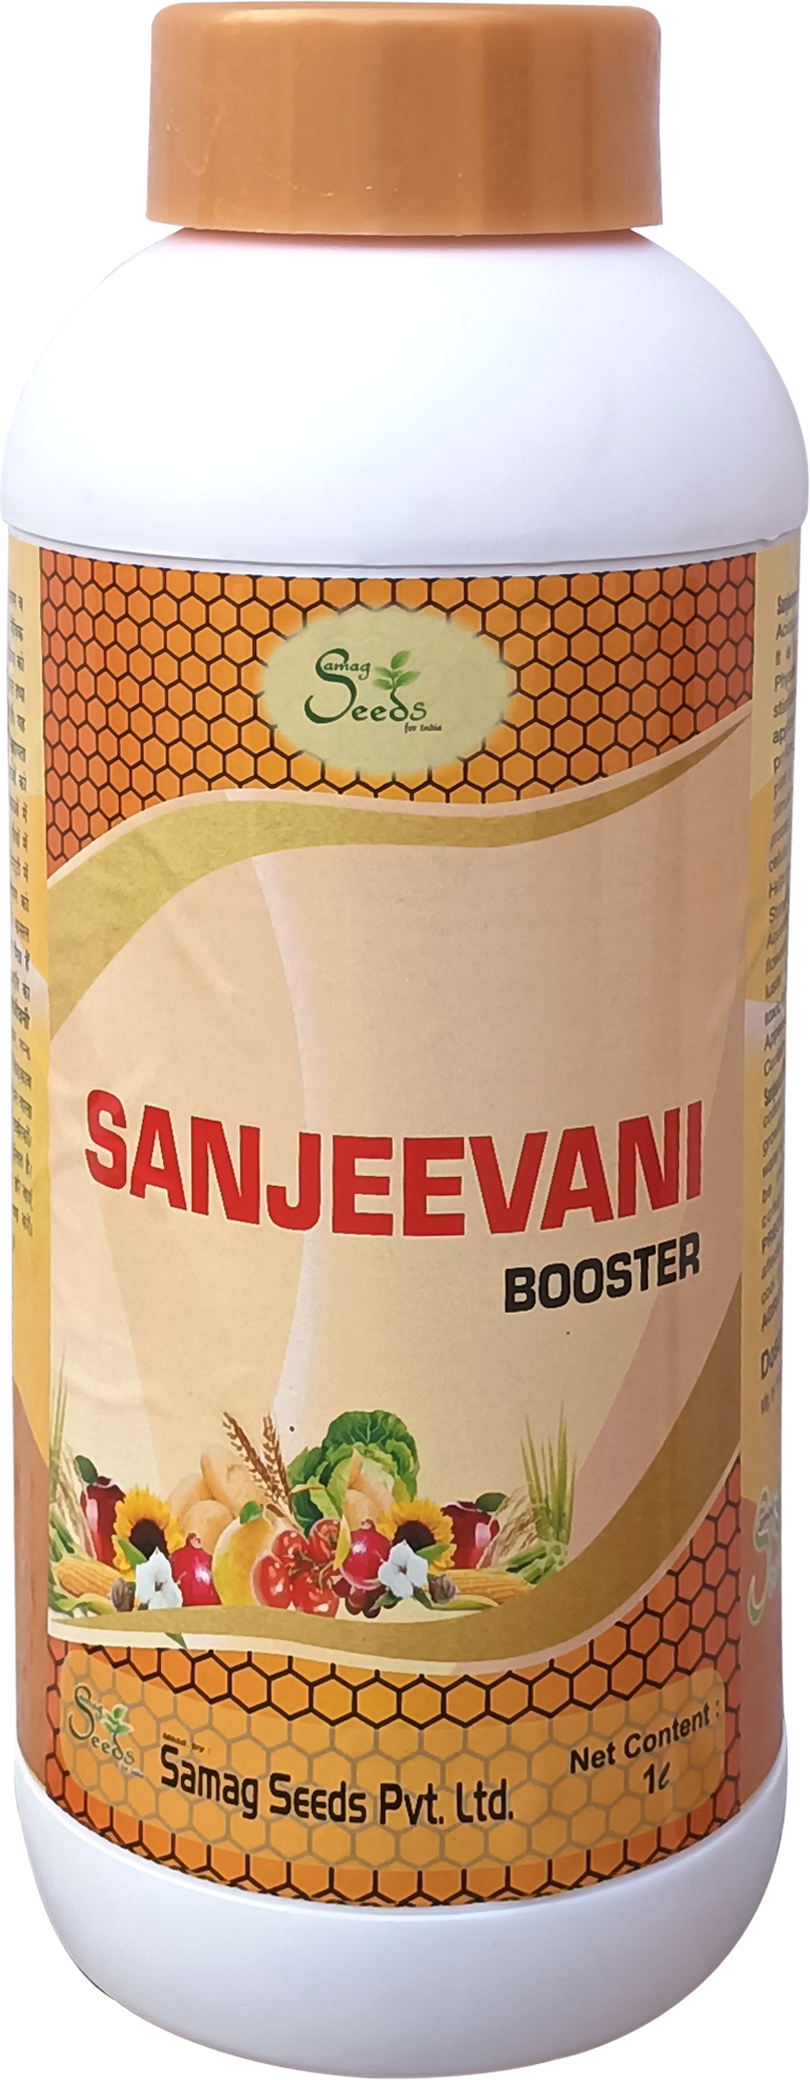 Sanjeevani Booster